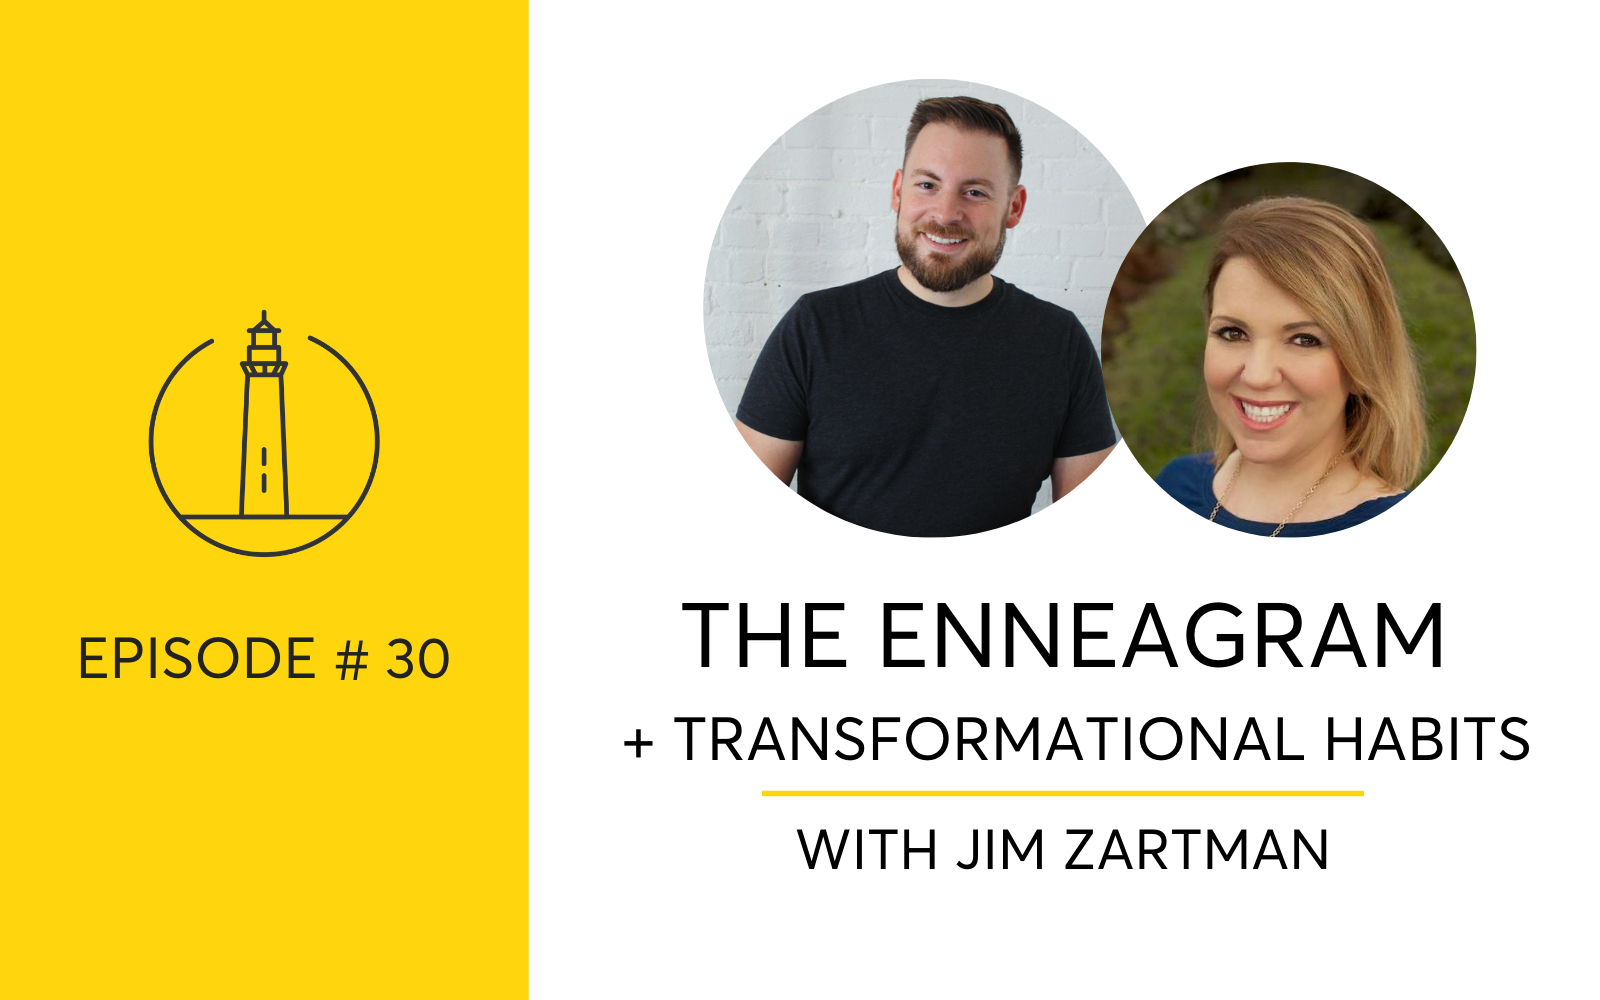 The Enneagram, transformational habits + uncovering your core beliefs, desires, needs + motivations